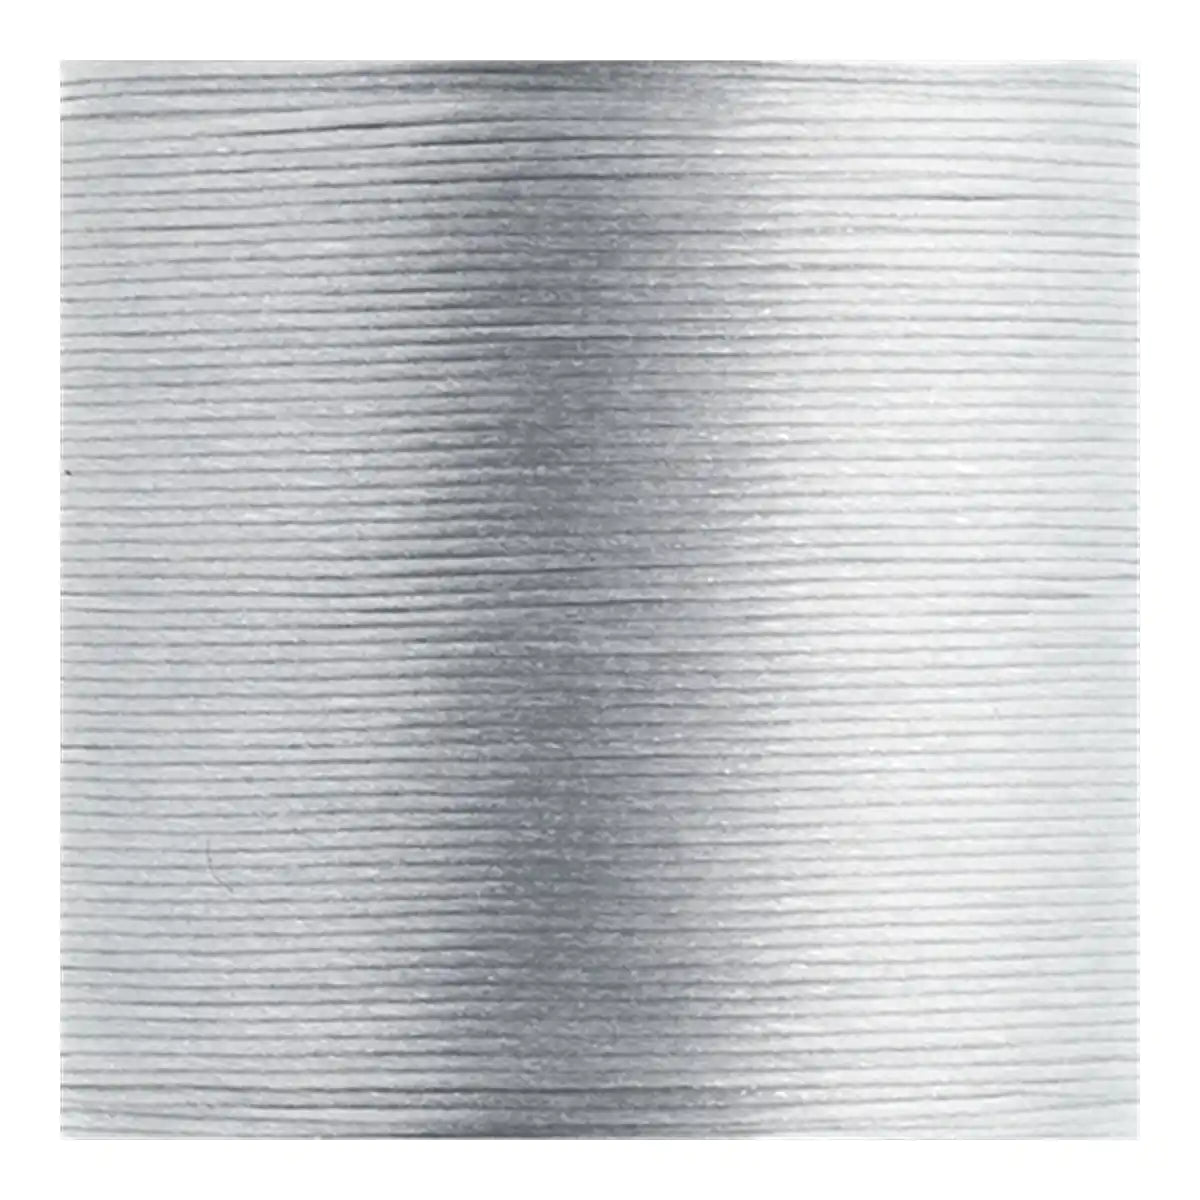 Miyuki thread silver 50 meters